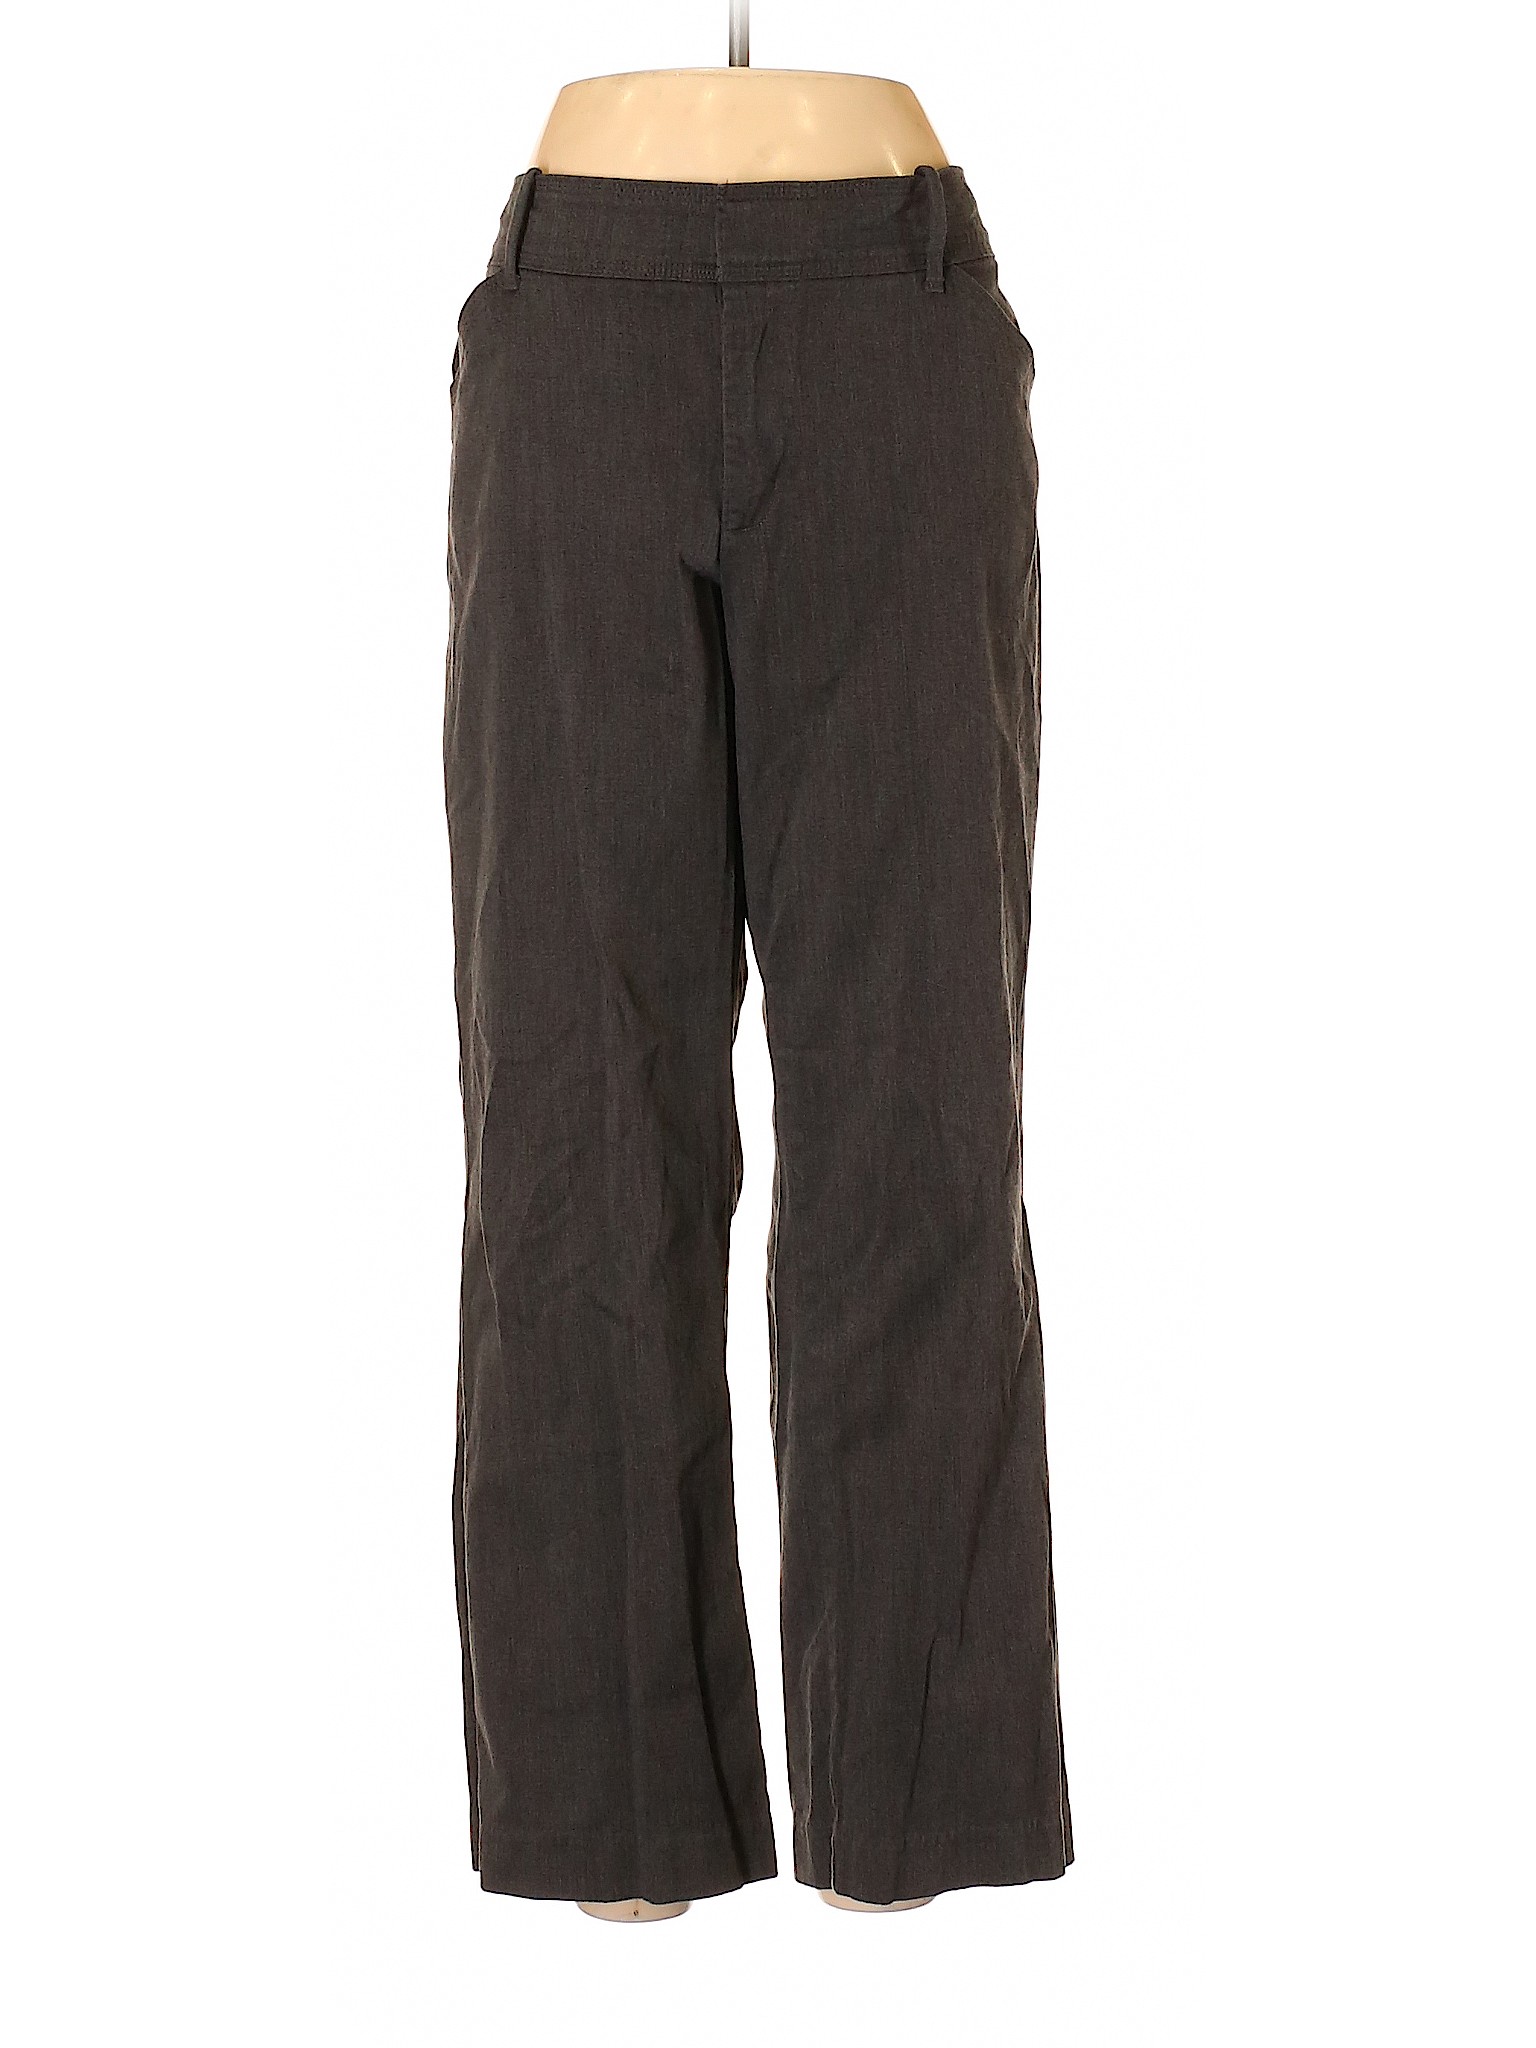 Lee Women Gray Dress Pants 6 Petites | eBay